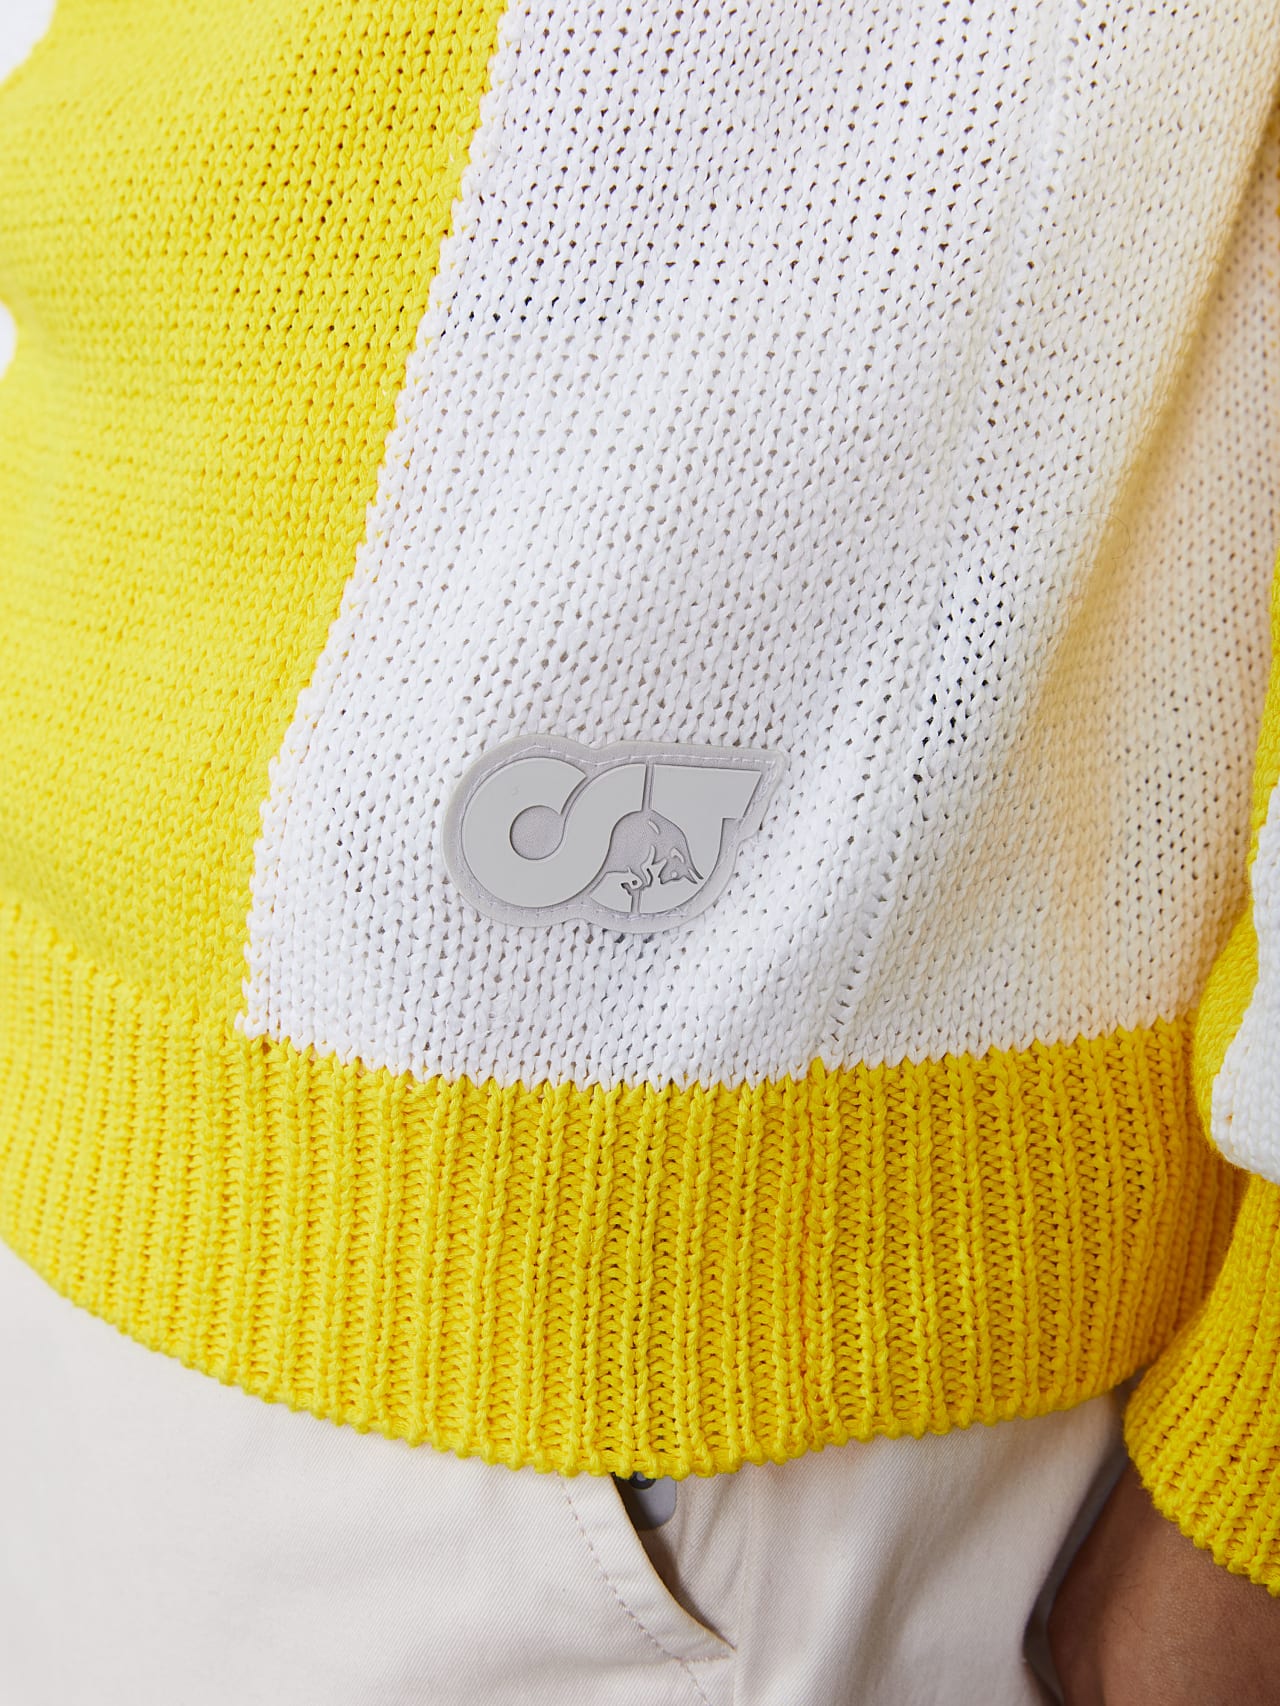 AlphaTauri | FASHY V1.Y6.01 | Colourblock Knit Sweater in yellow / white for Men